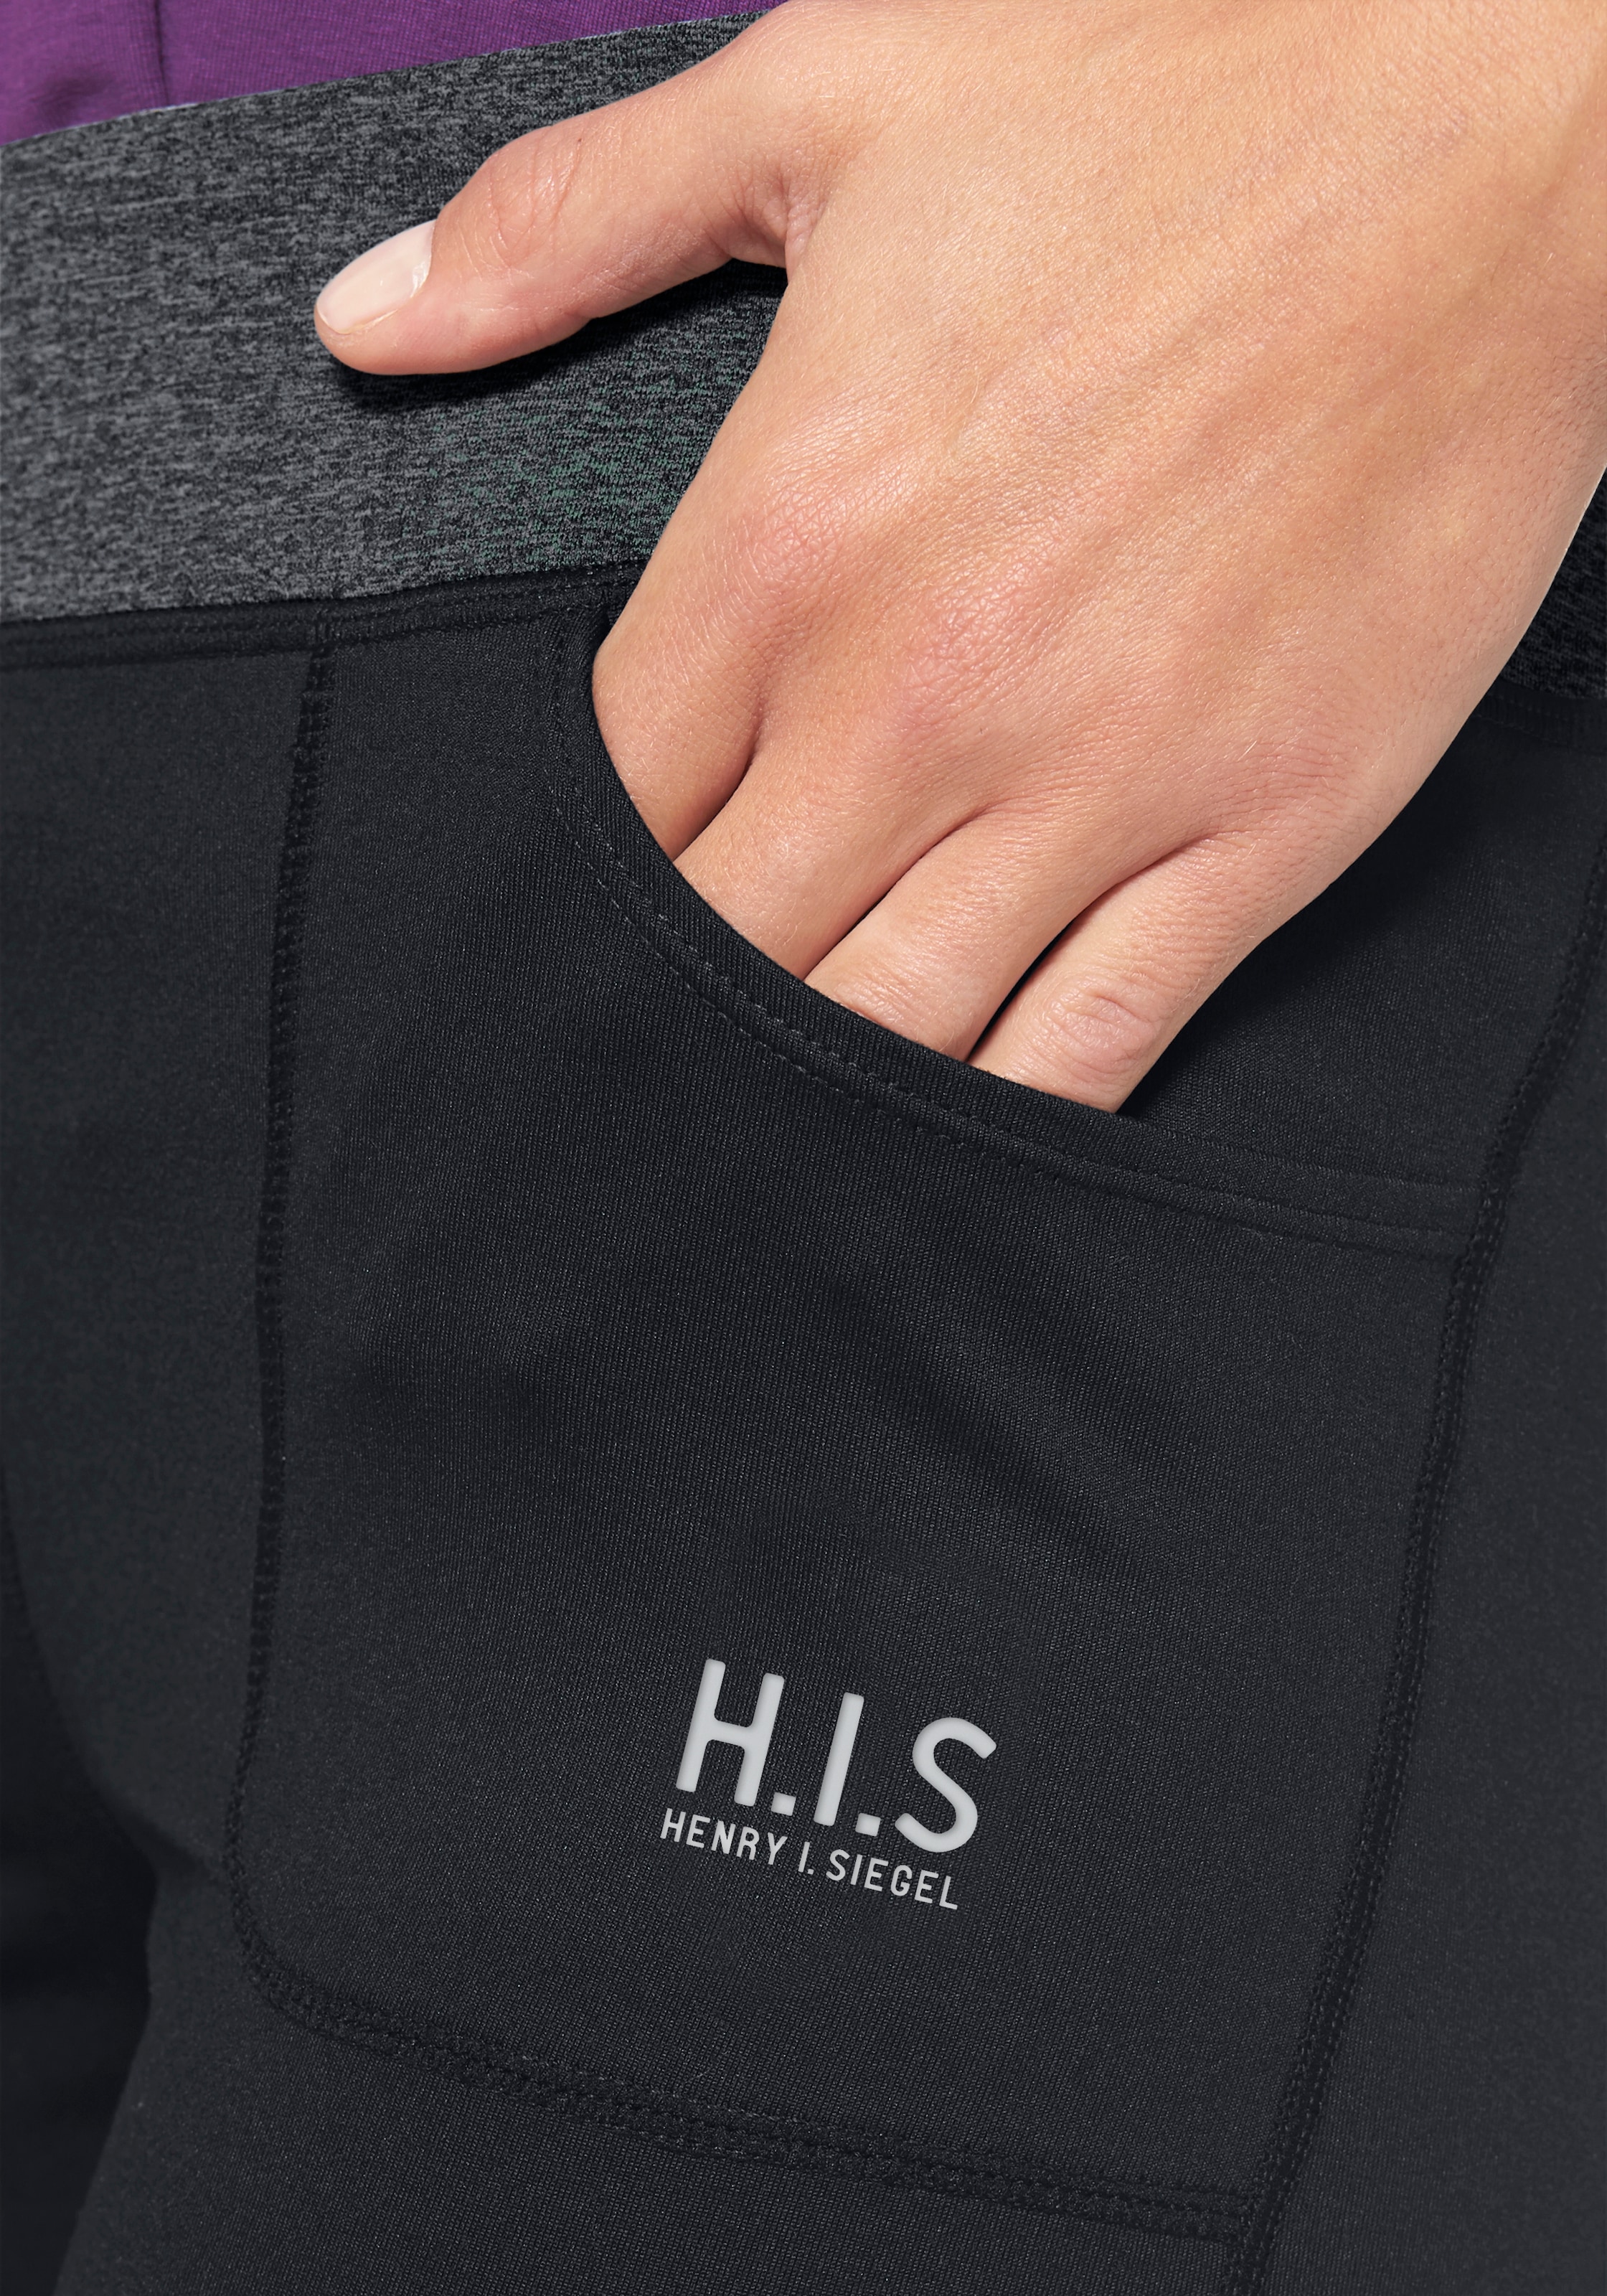 Wickeloptik mit H.I.S Jazzpants Bund Material«, »aus recyceltem online